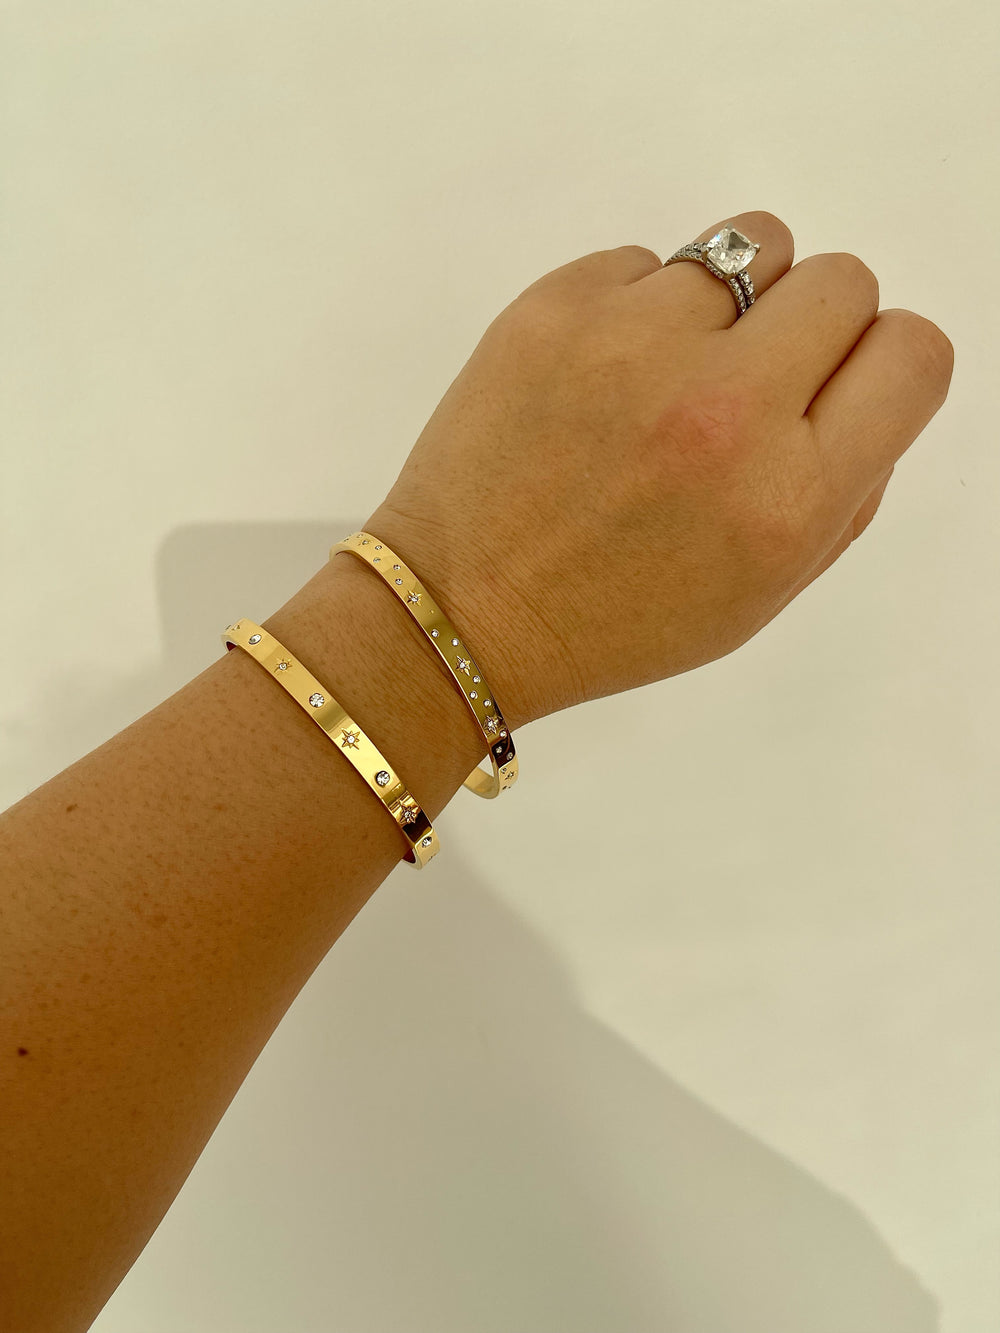 Olivia Le Rio Unicorn Bracelet - Gold - 6.5